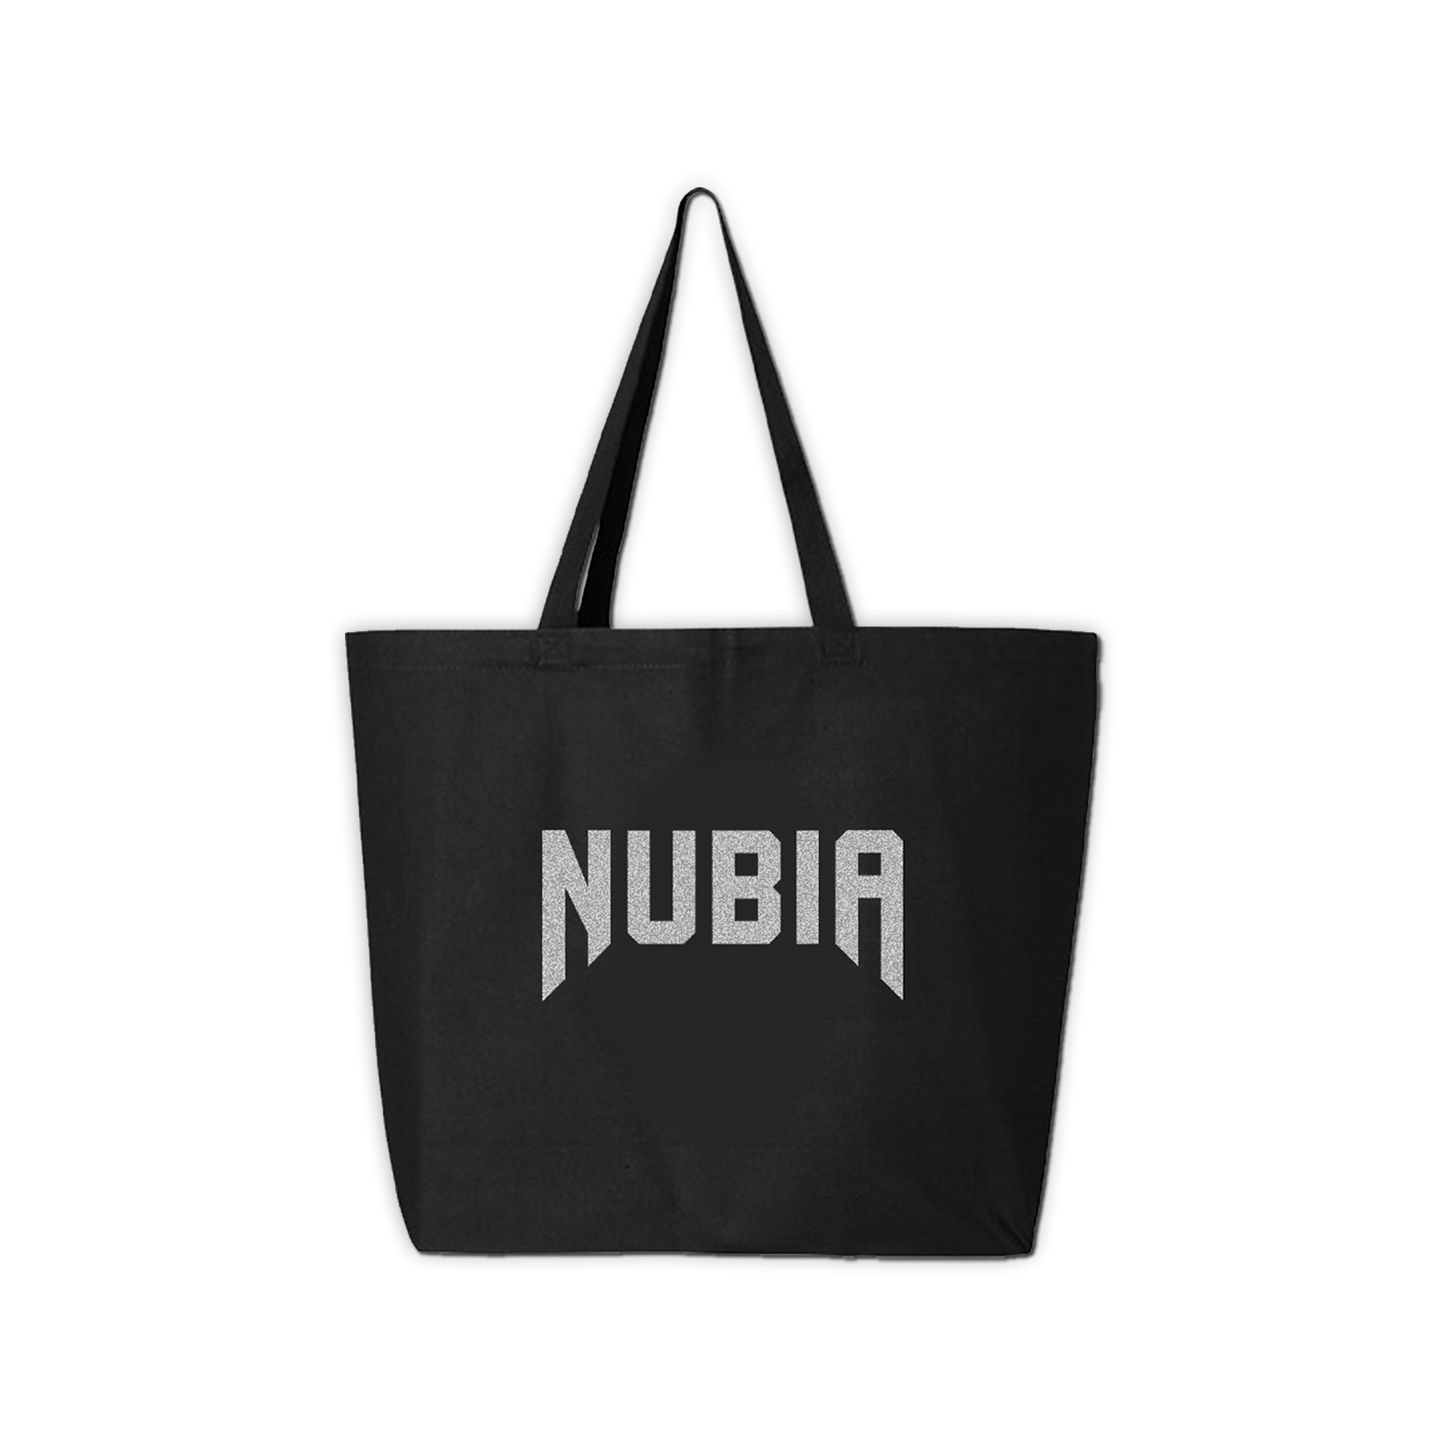 Nubia Tote Bag